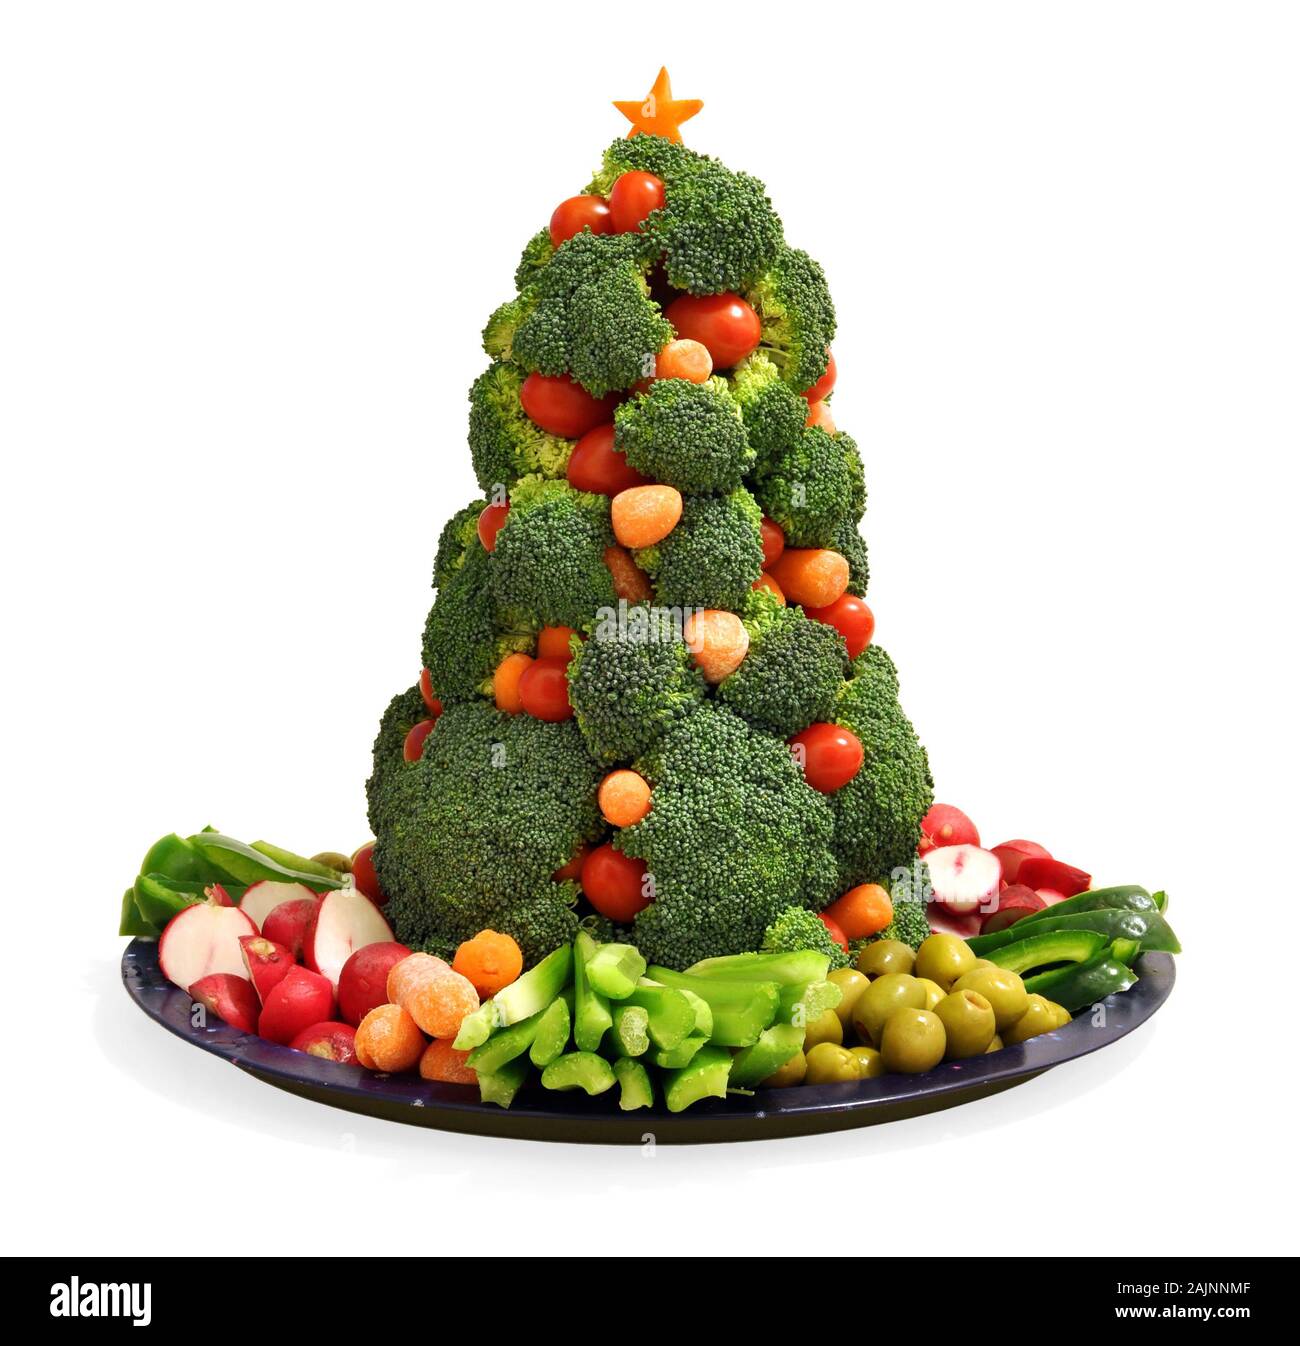 Homemade vegan holiday vegetable platter with broccoli Christmas tree Stock Photo